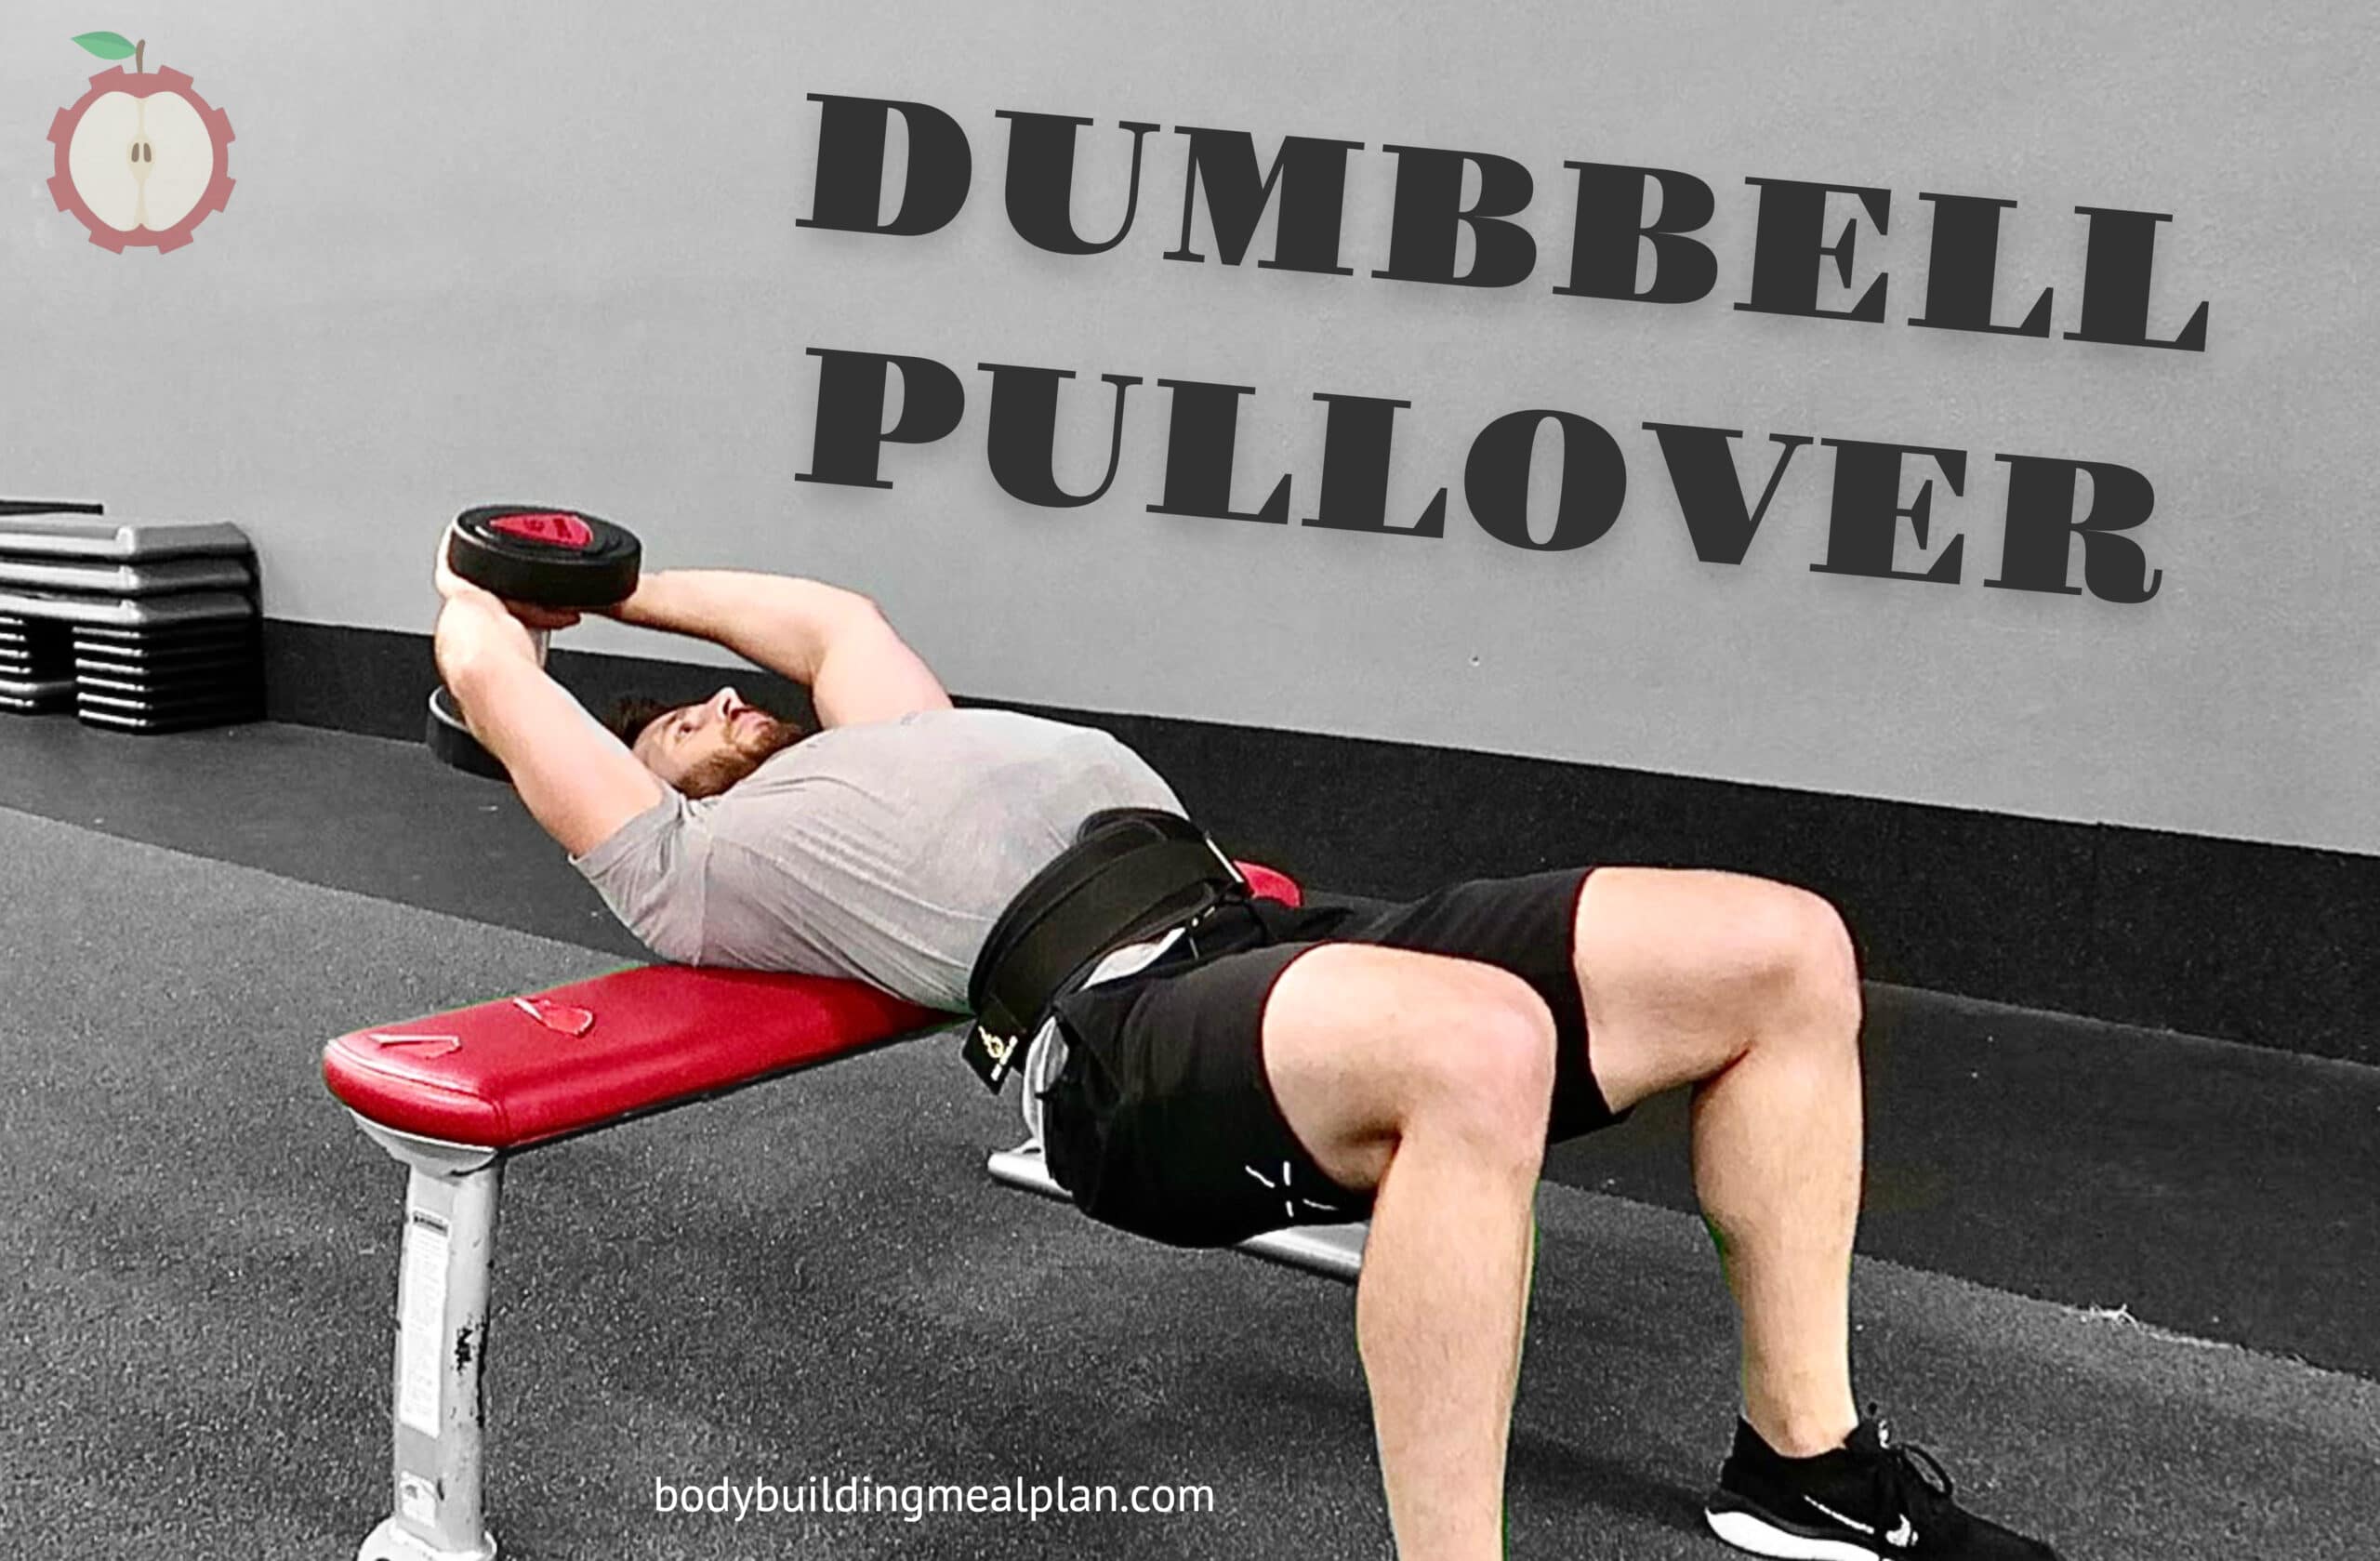 https://www.bodybuildingmealplan.com/wp-content/uploads/Dumbbell-Pullover-scaled.jpg